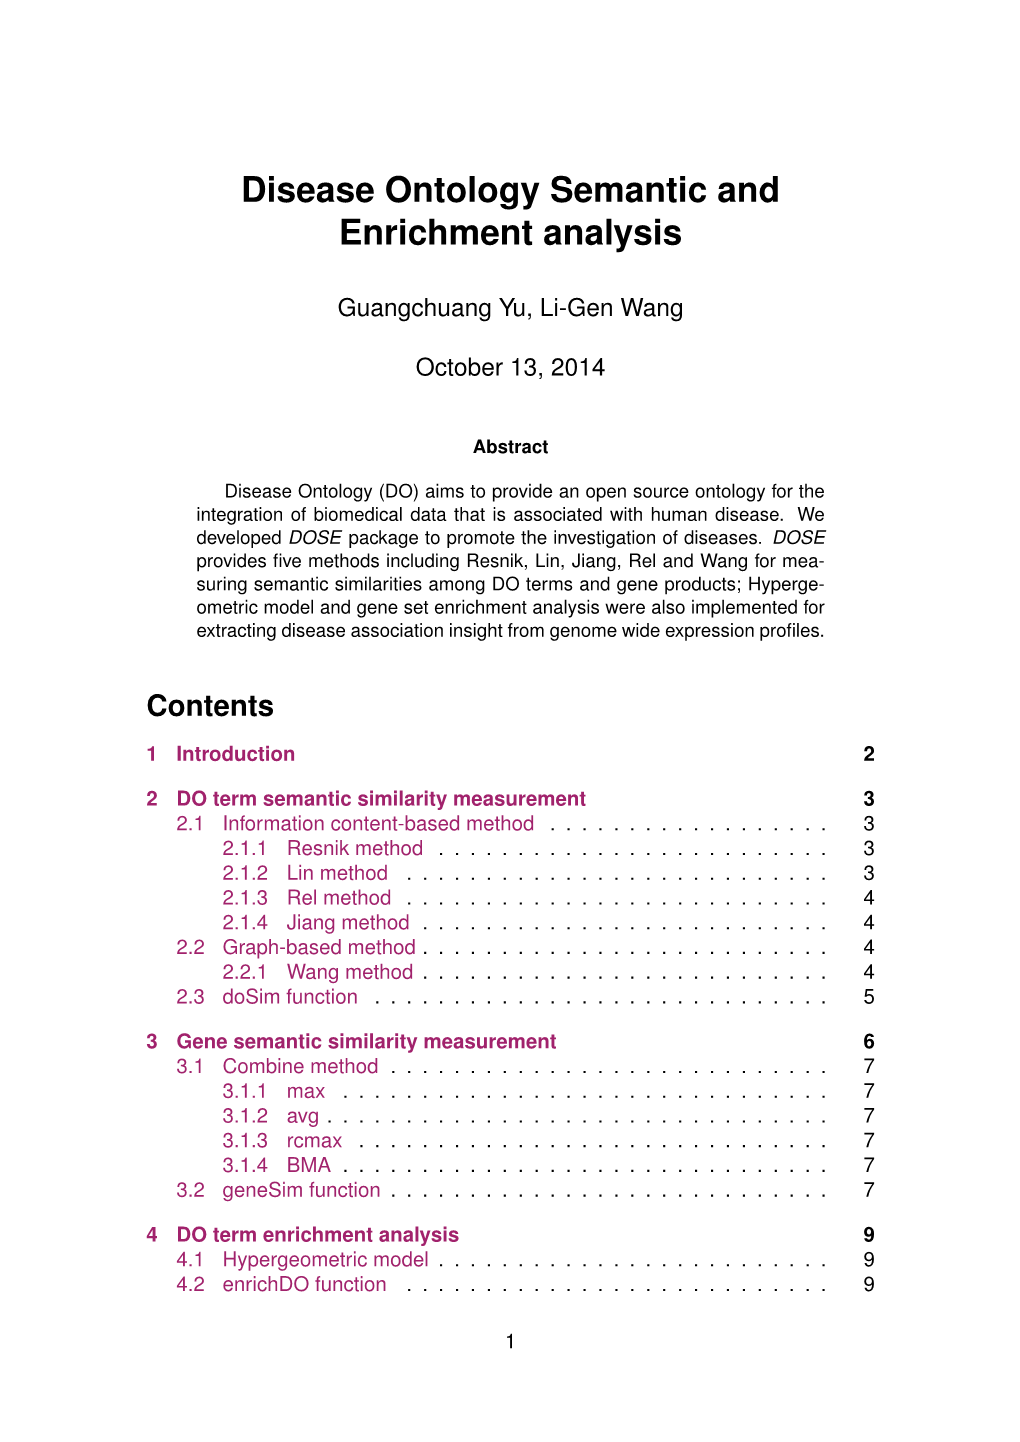 Disease Ontology Semantic and Enrichment Analysis